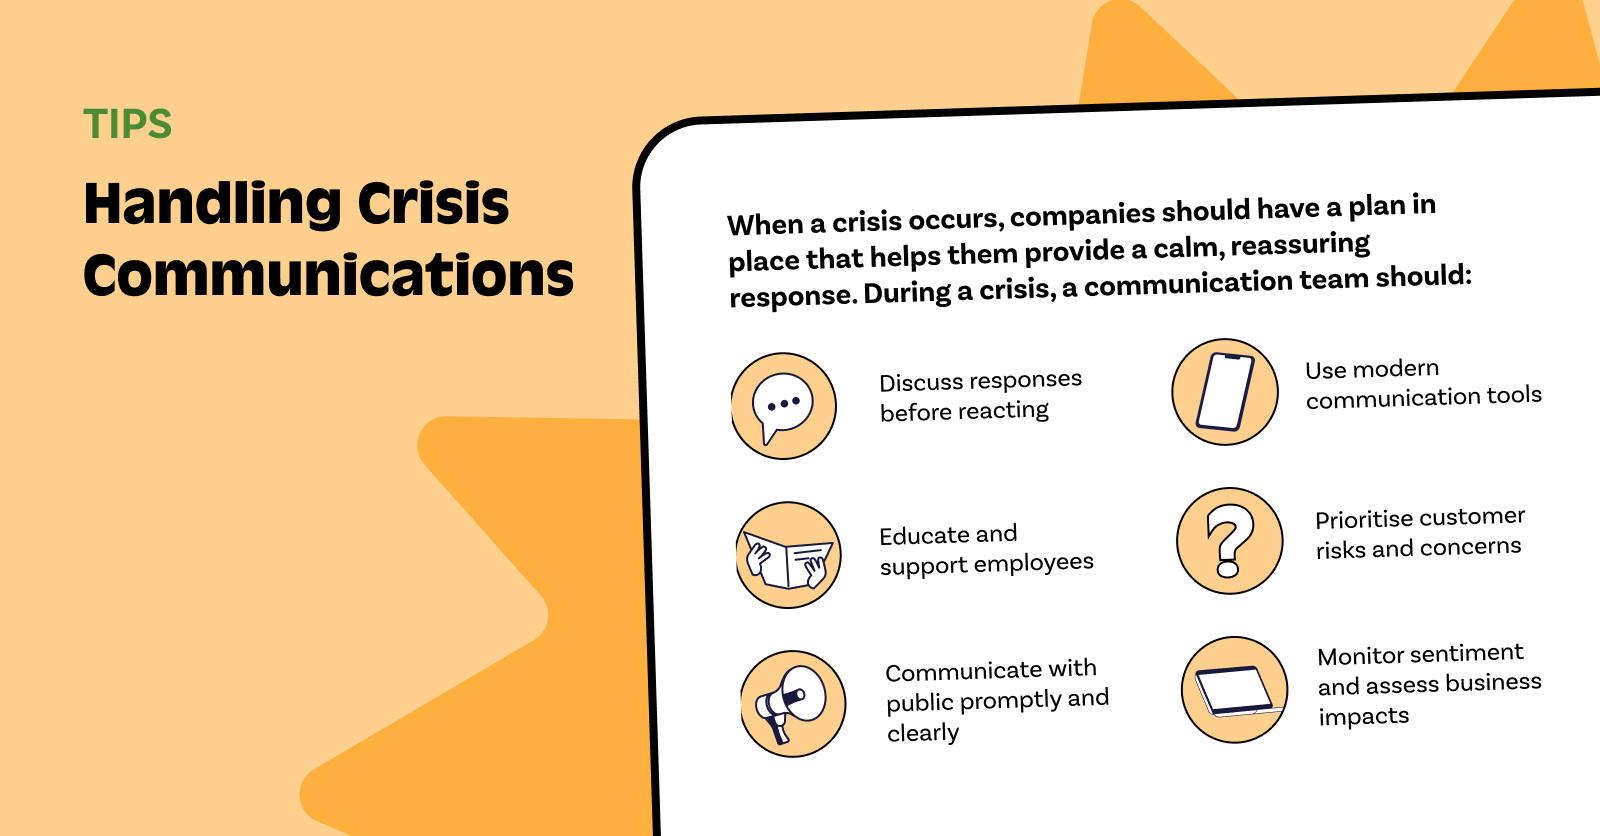 Tips for handling crisis communications.